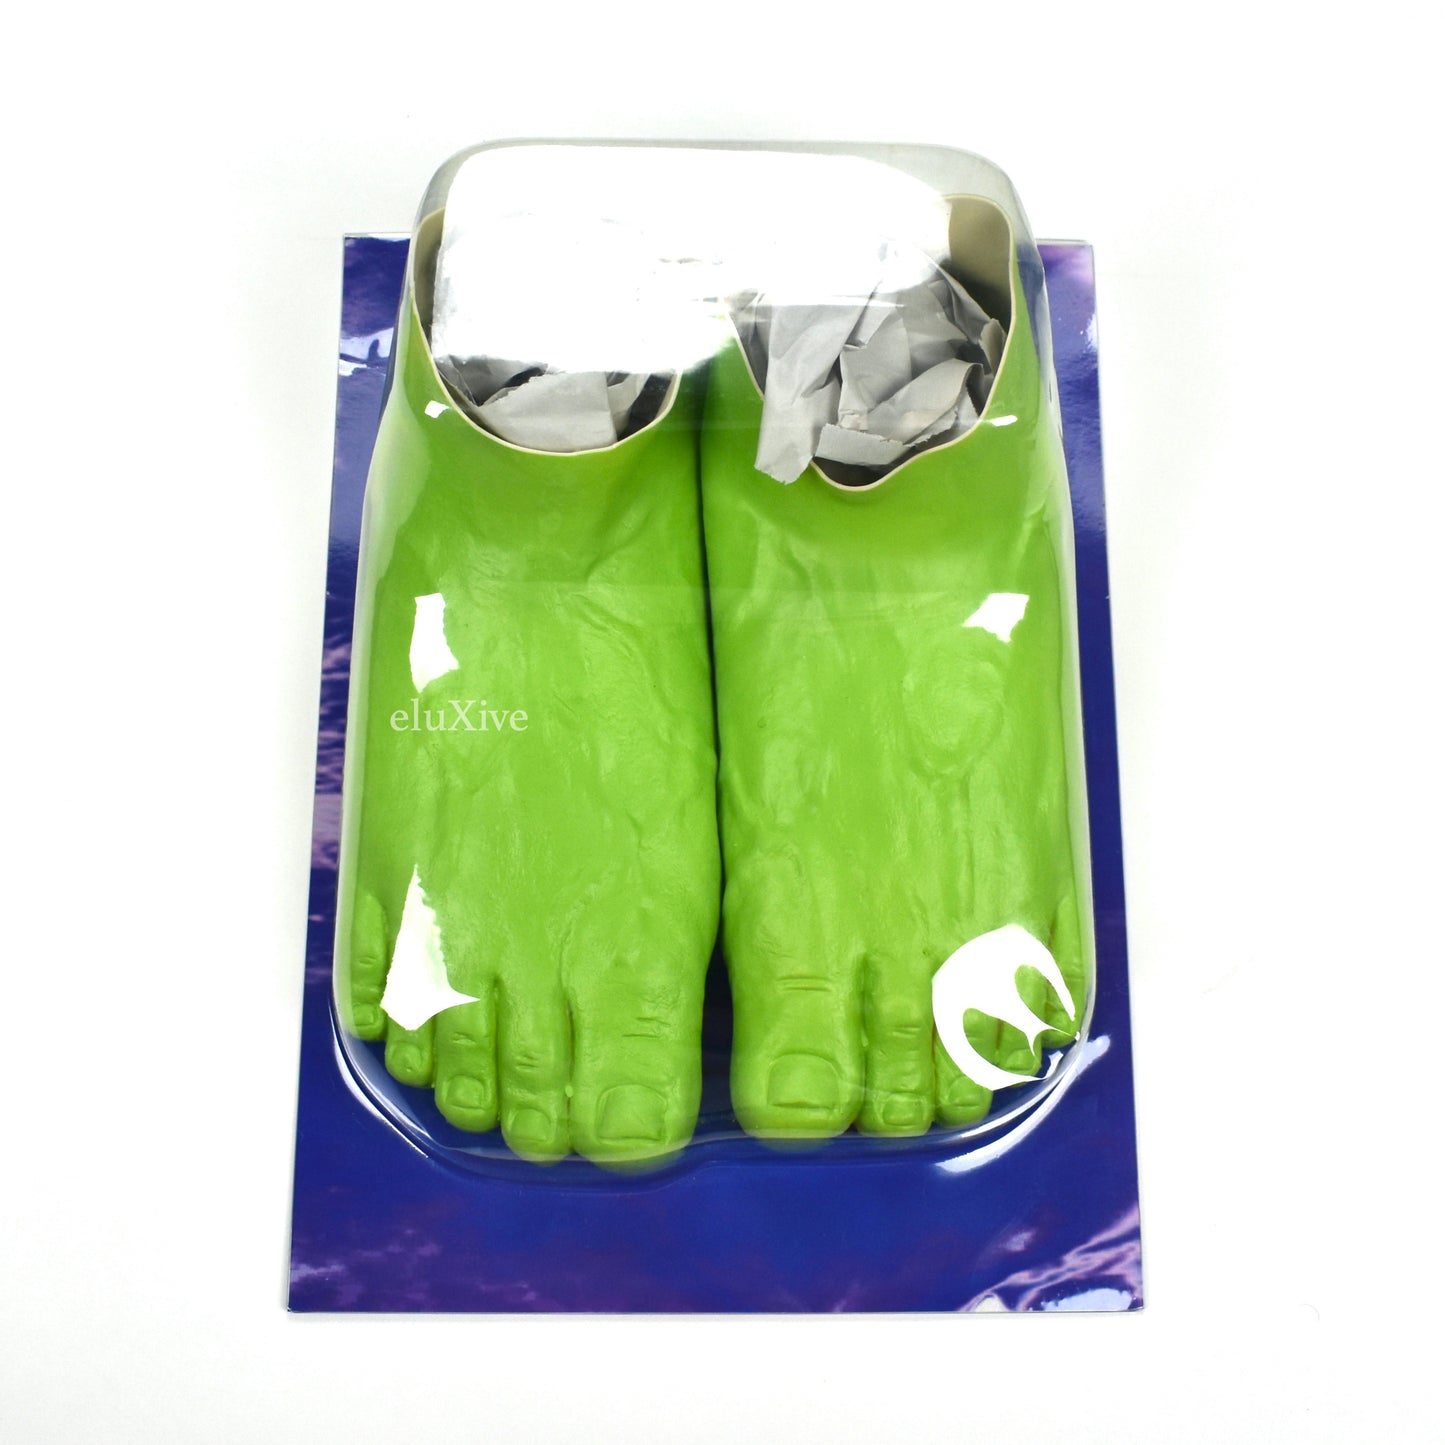 Imran Potato - Caveman Foot Slippers 'Hulk' (Green)